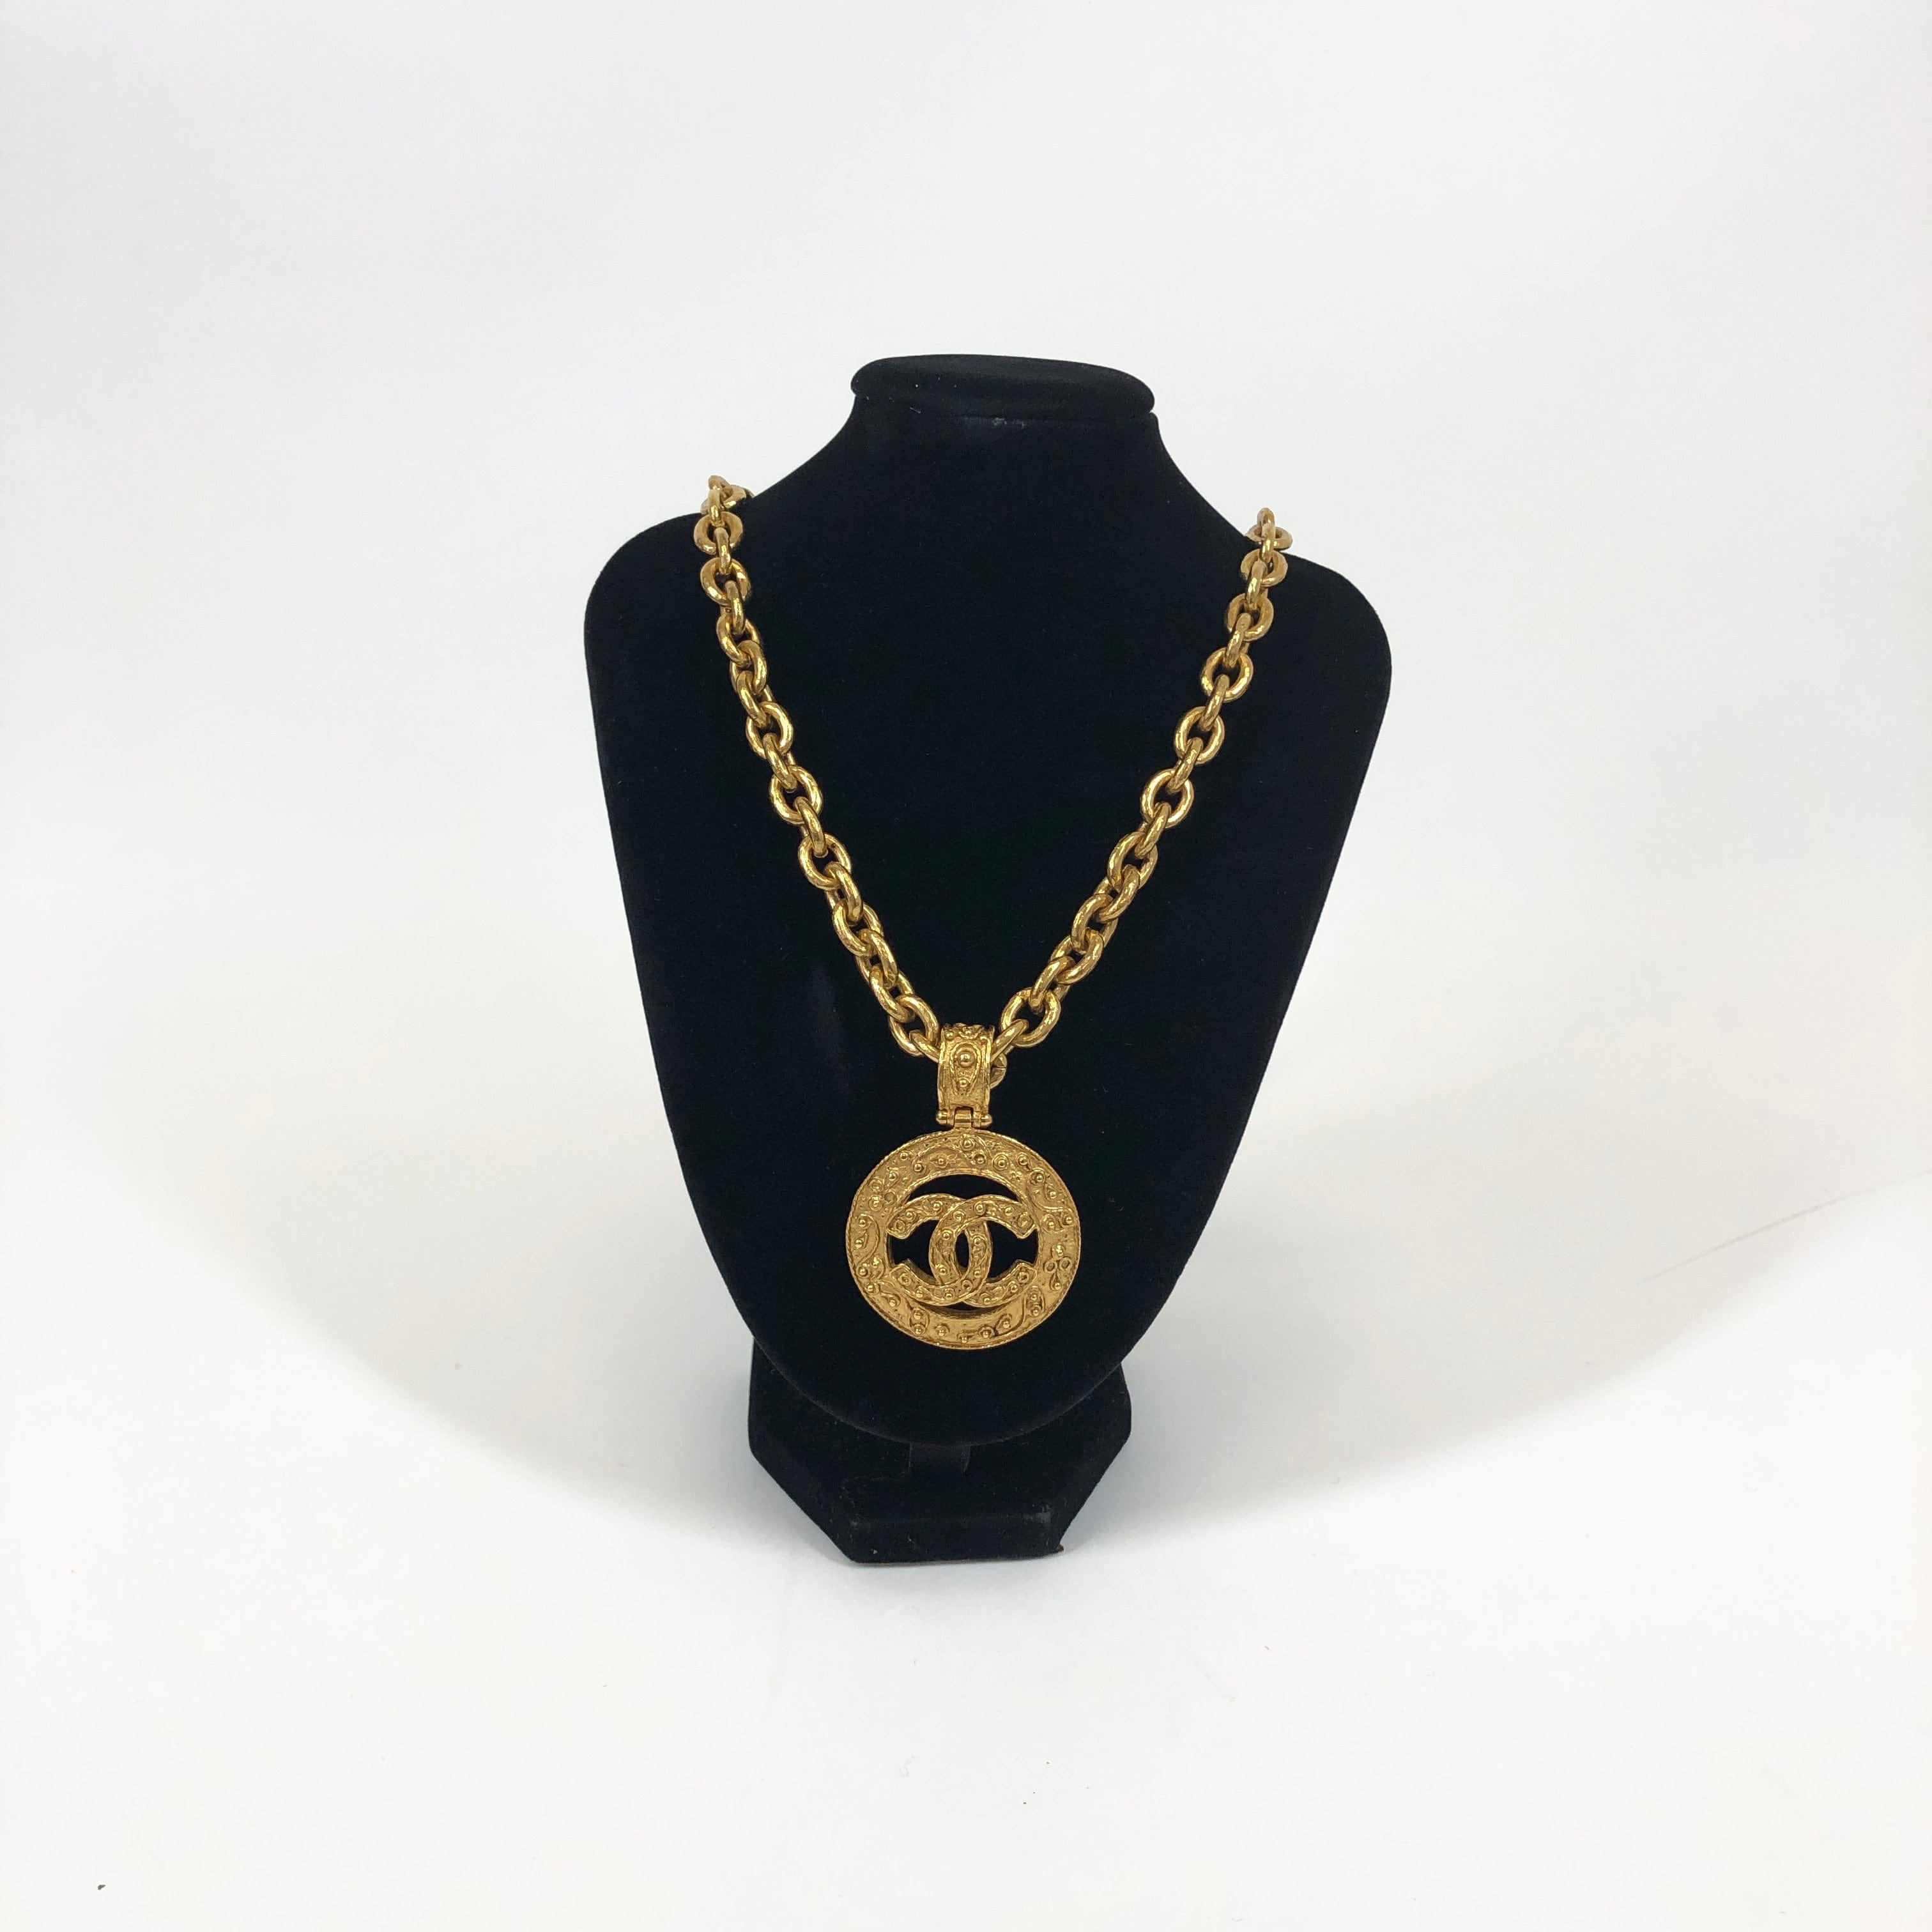 Chanel Vintage Classic (precious Metal) Necklace Pendant PXL1070